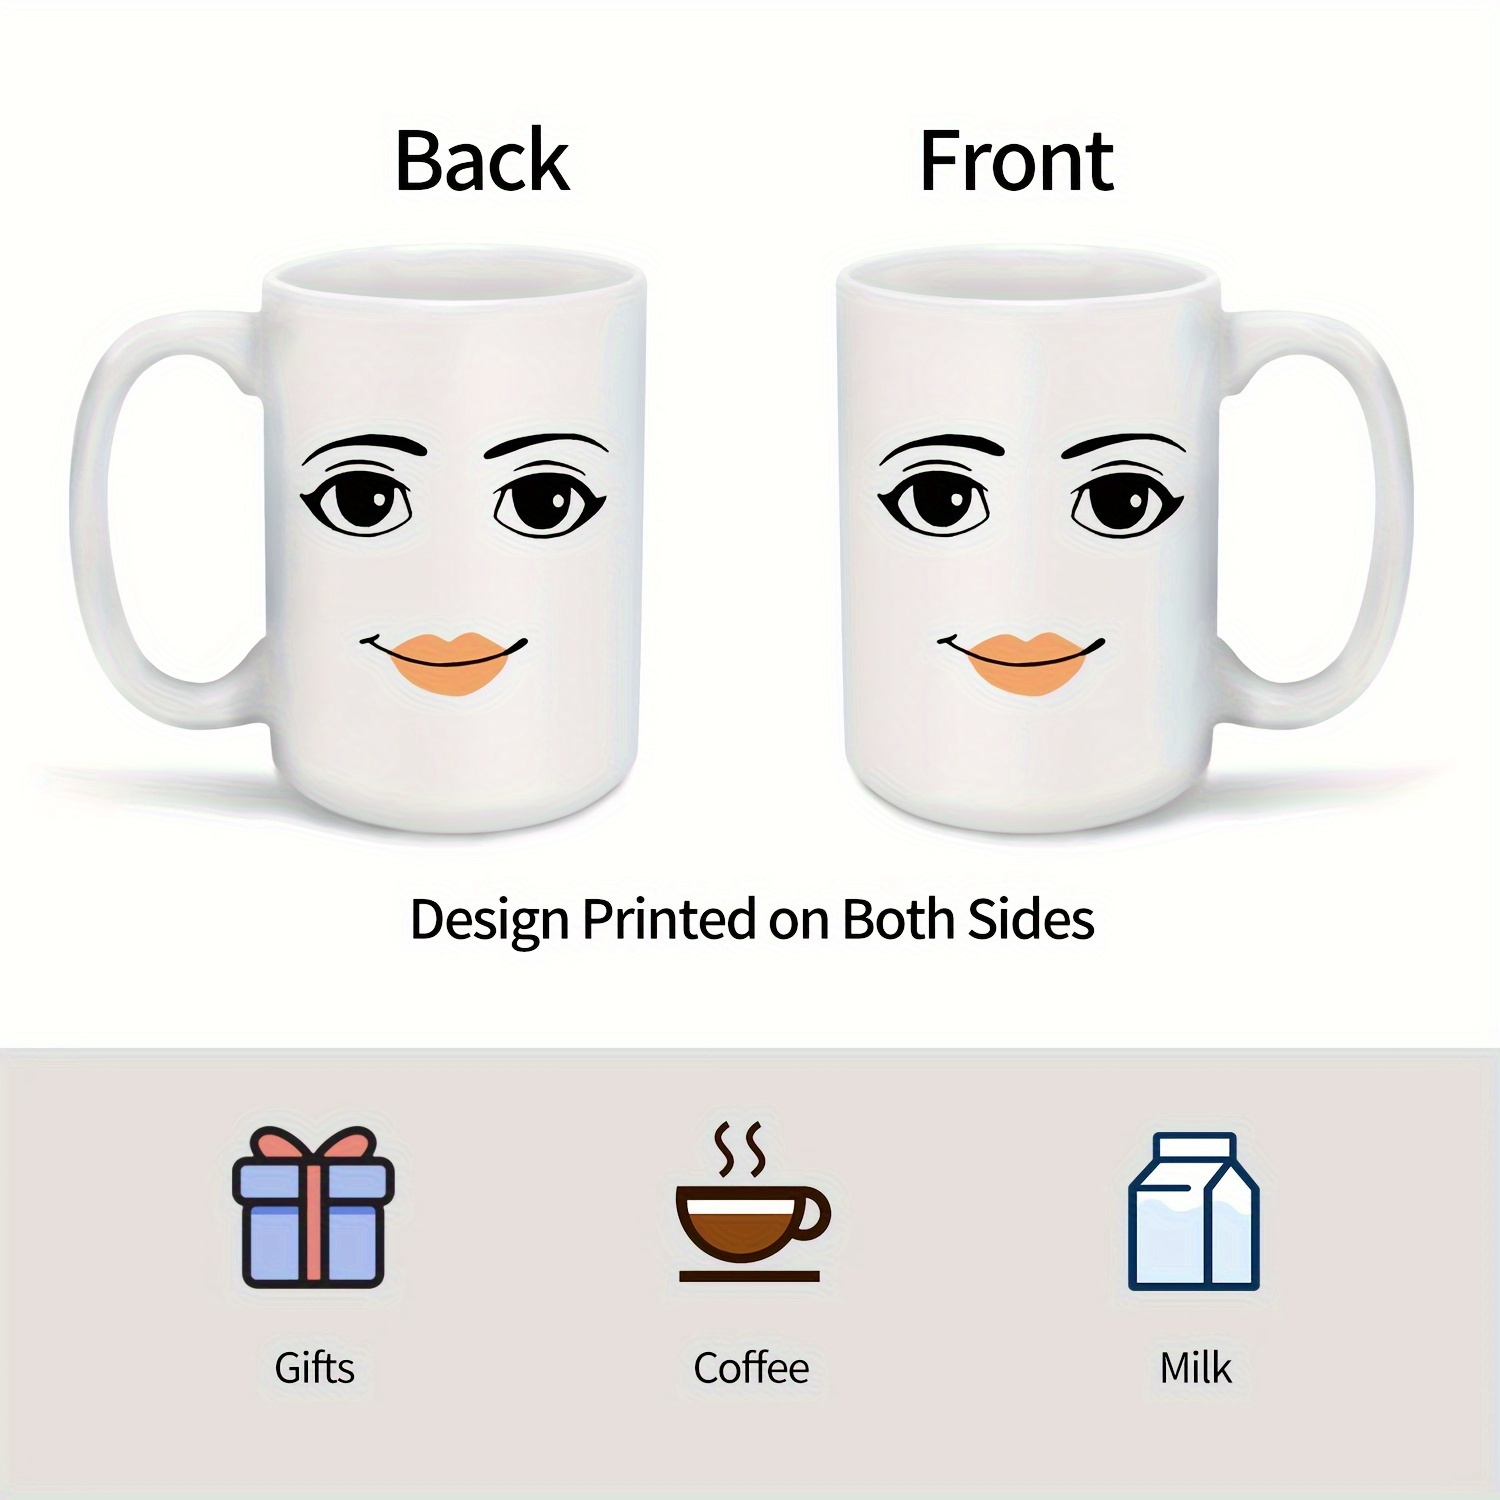 Roblox Woman Face Premium Quality Beautiful Roblox Gift Mug 